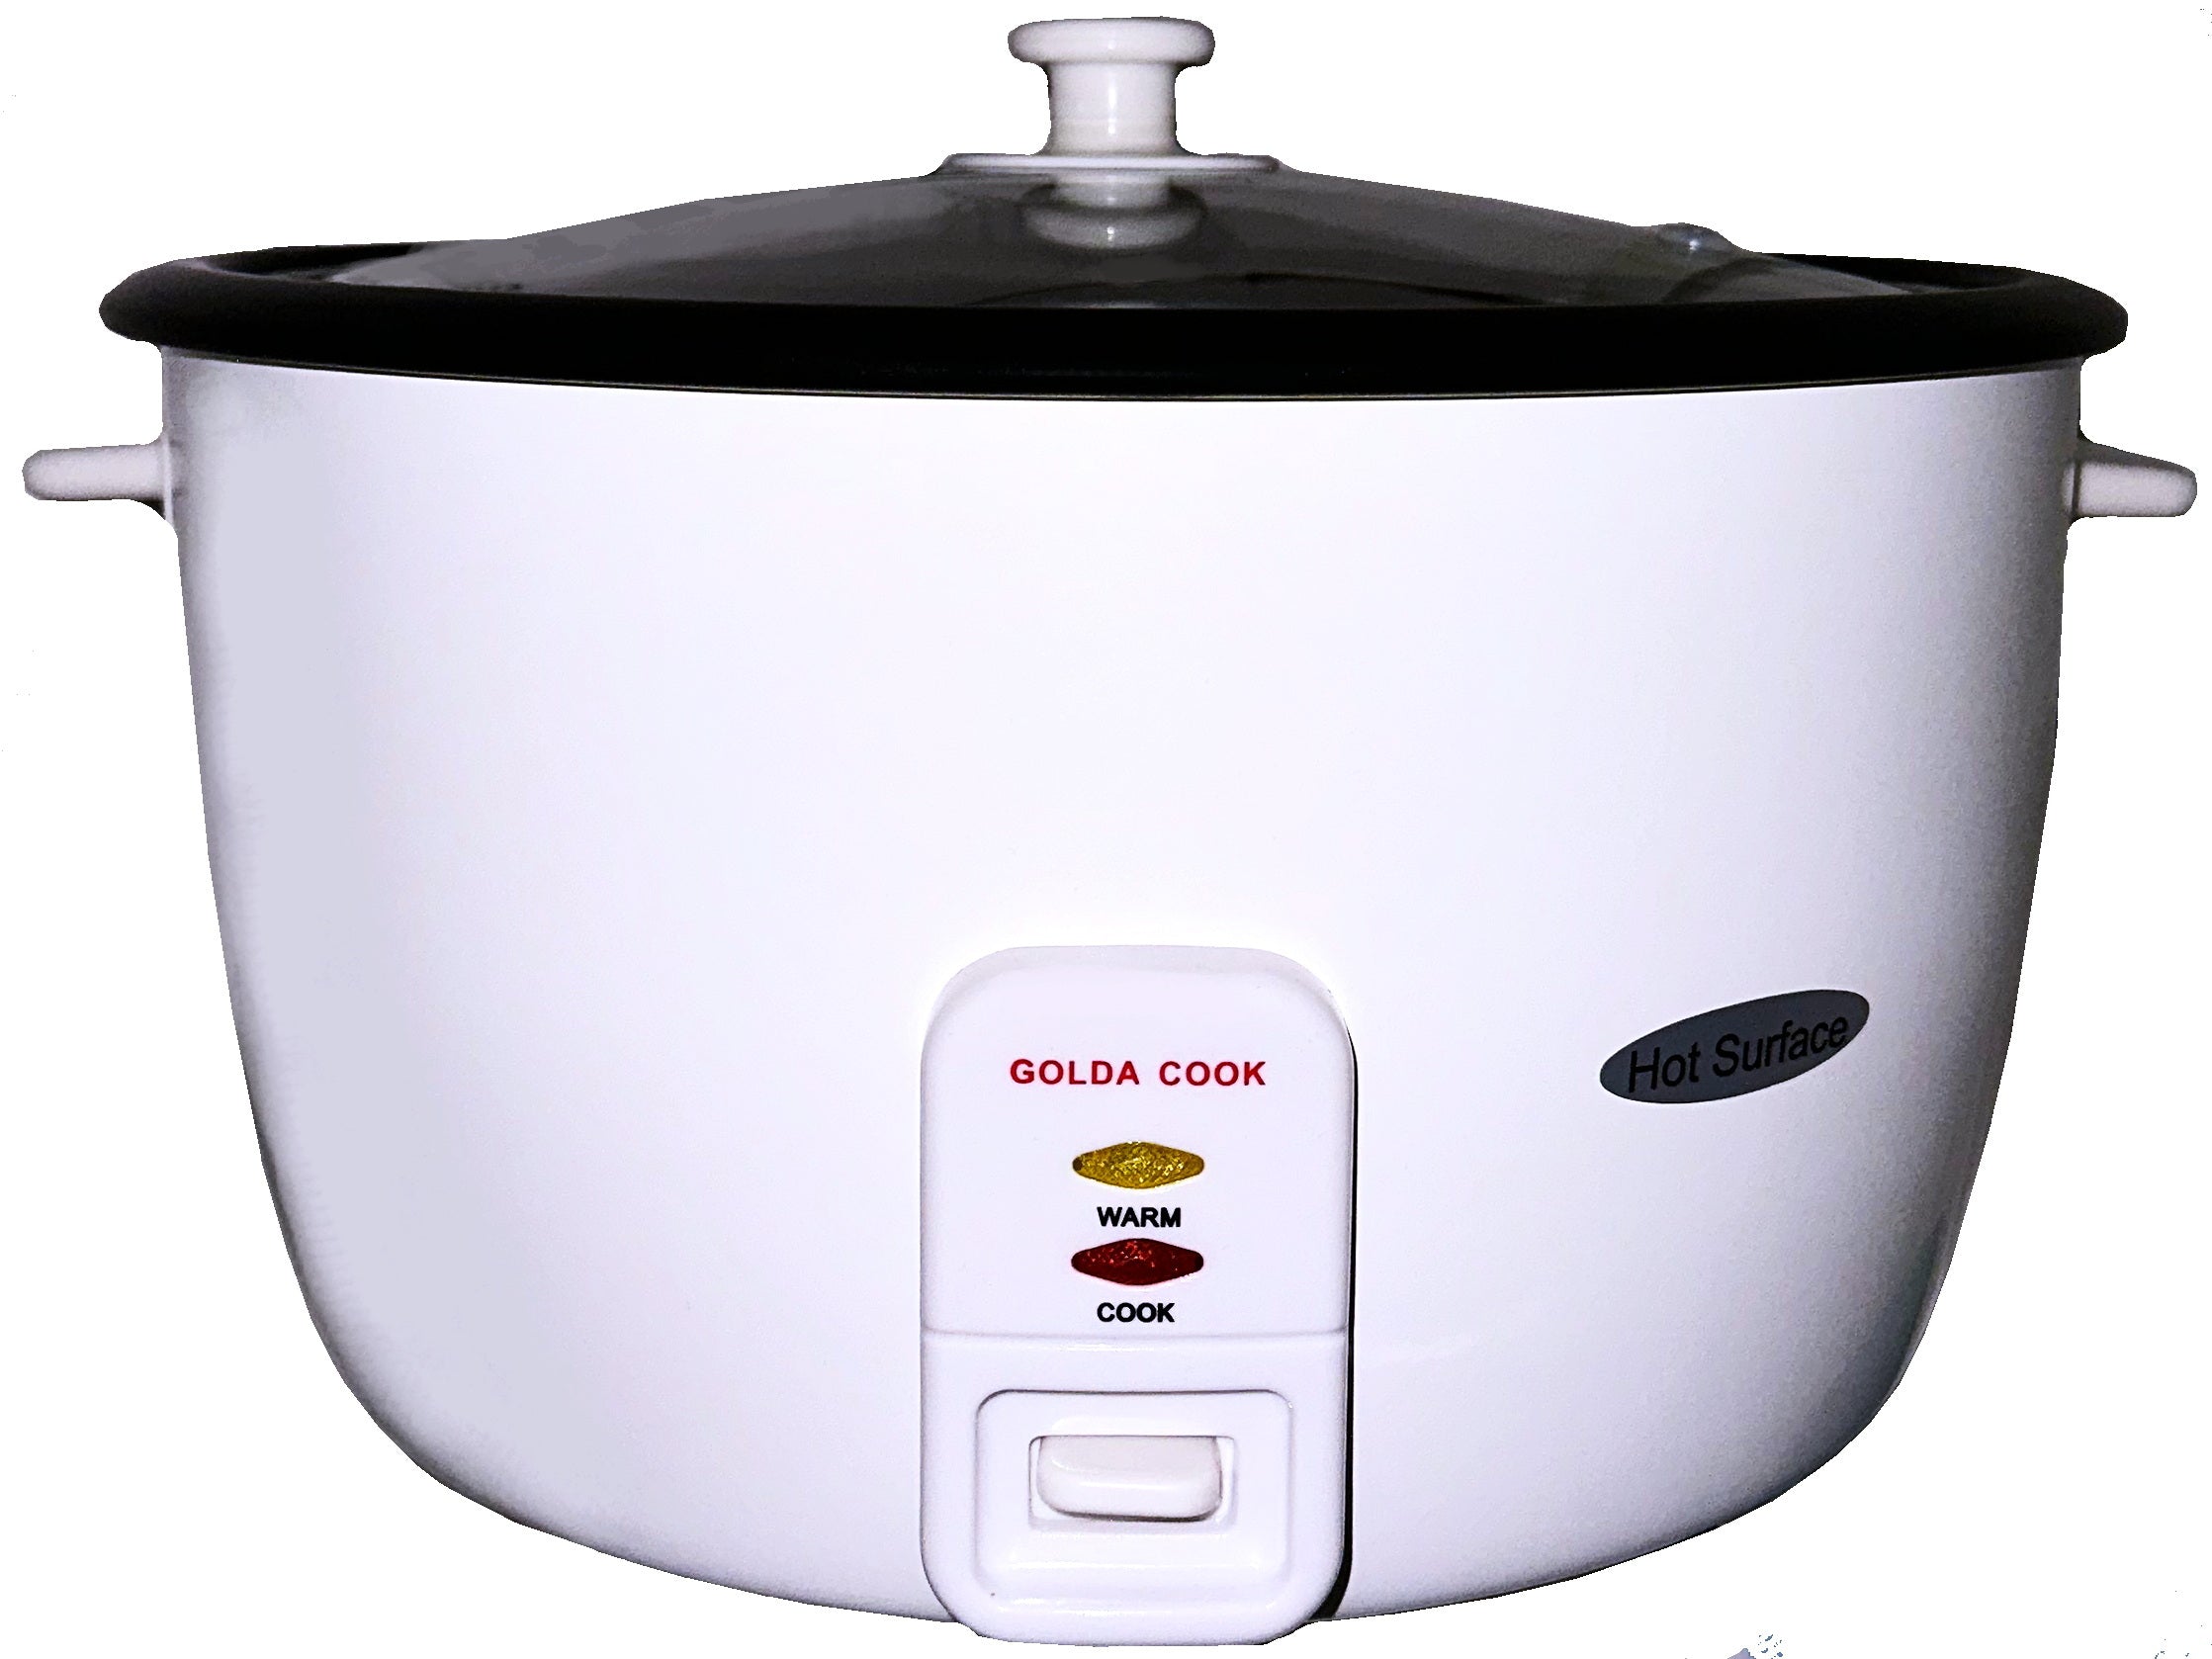 5 CUP Rice Cooker Automatic - Rice Crust (Tahdig)Maker - PoloPaz DRC-2 –  Kalamala